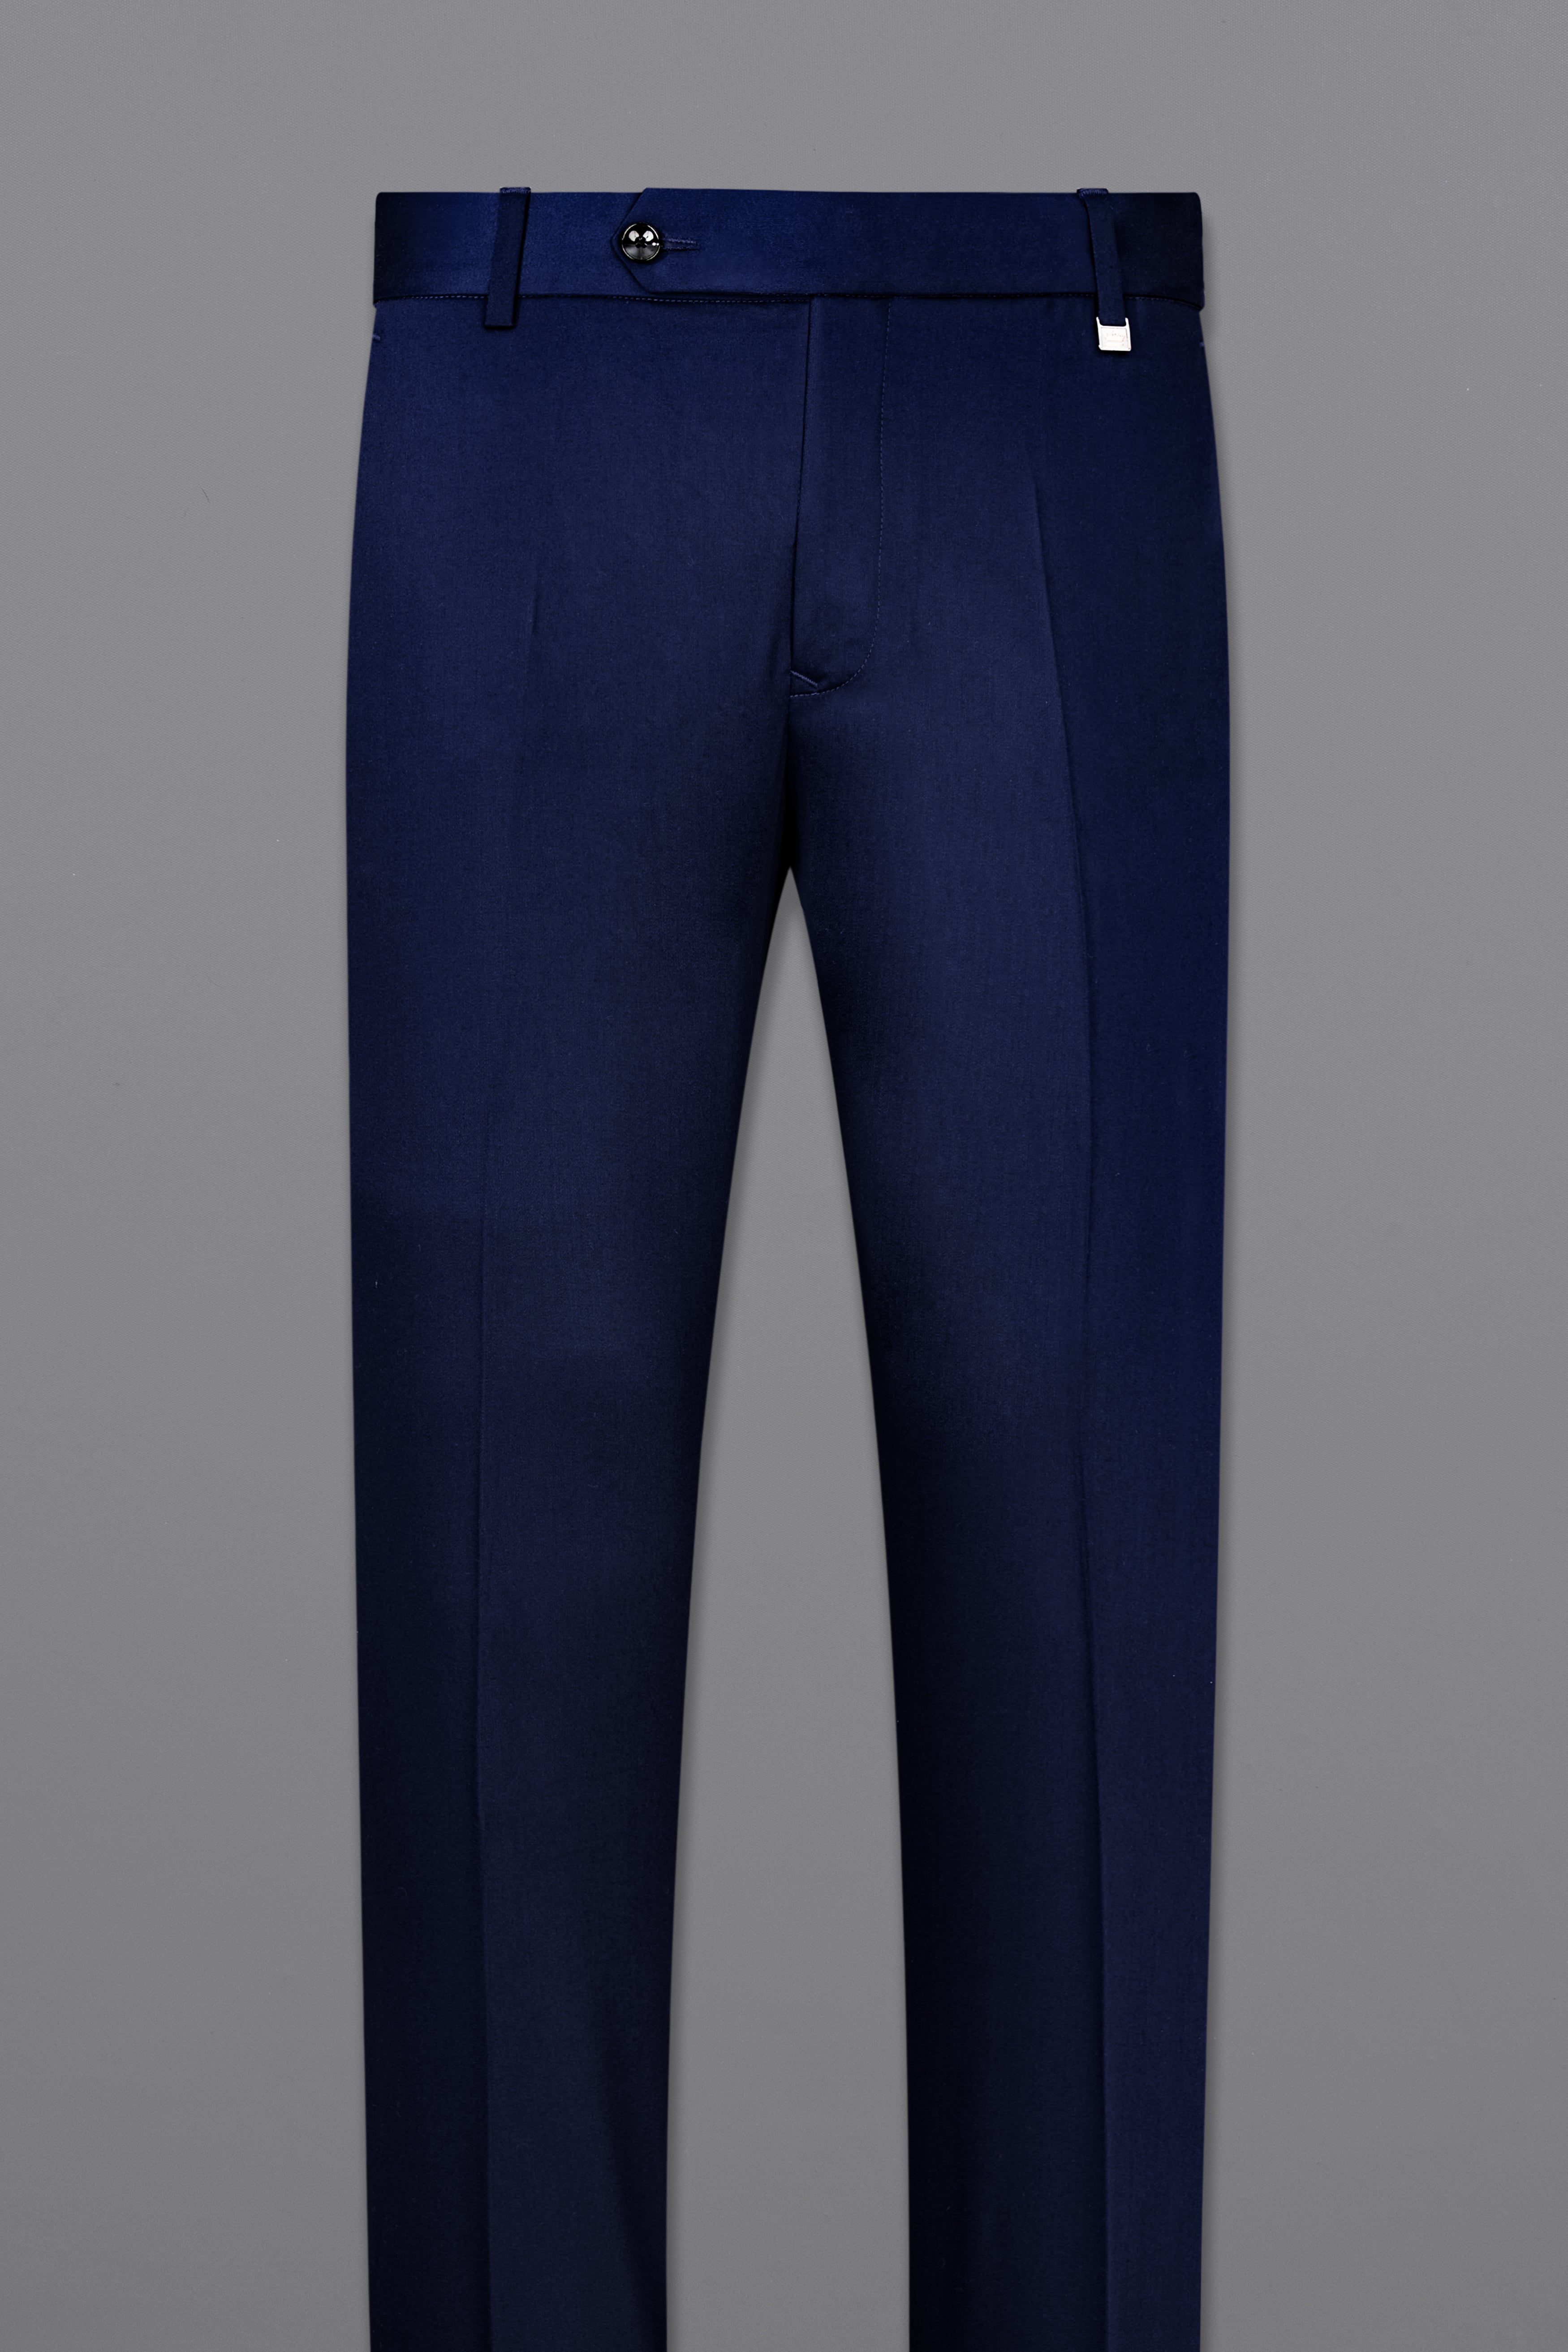 Magnate Neapolitan Dress Pants - Navy – Bombay Shirt Company